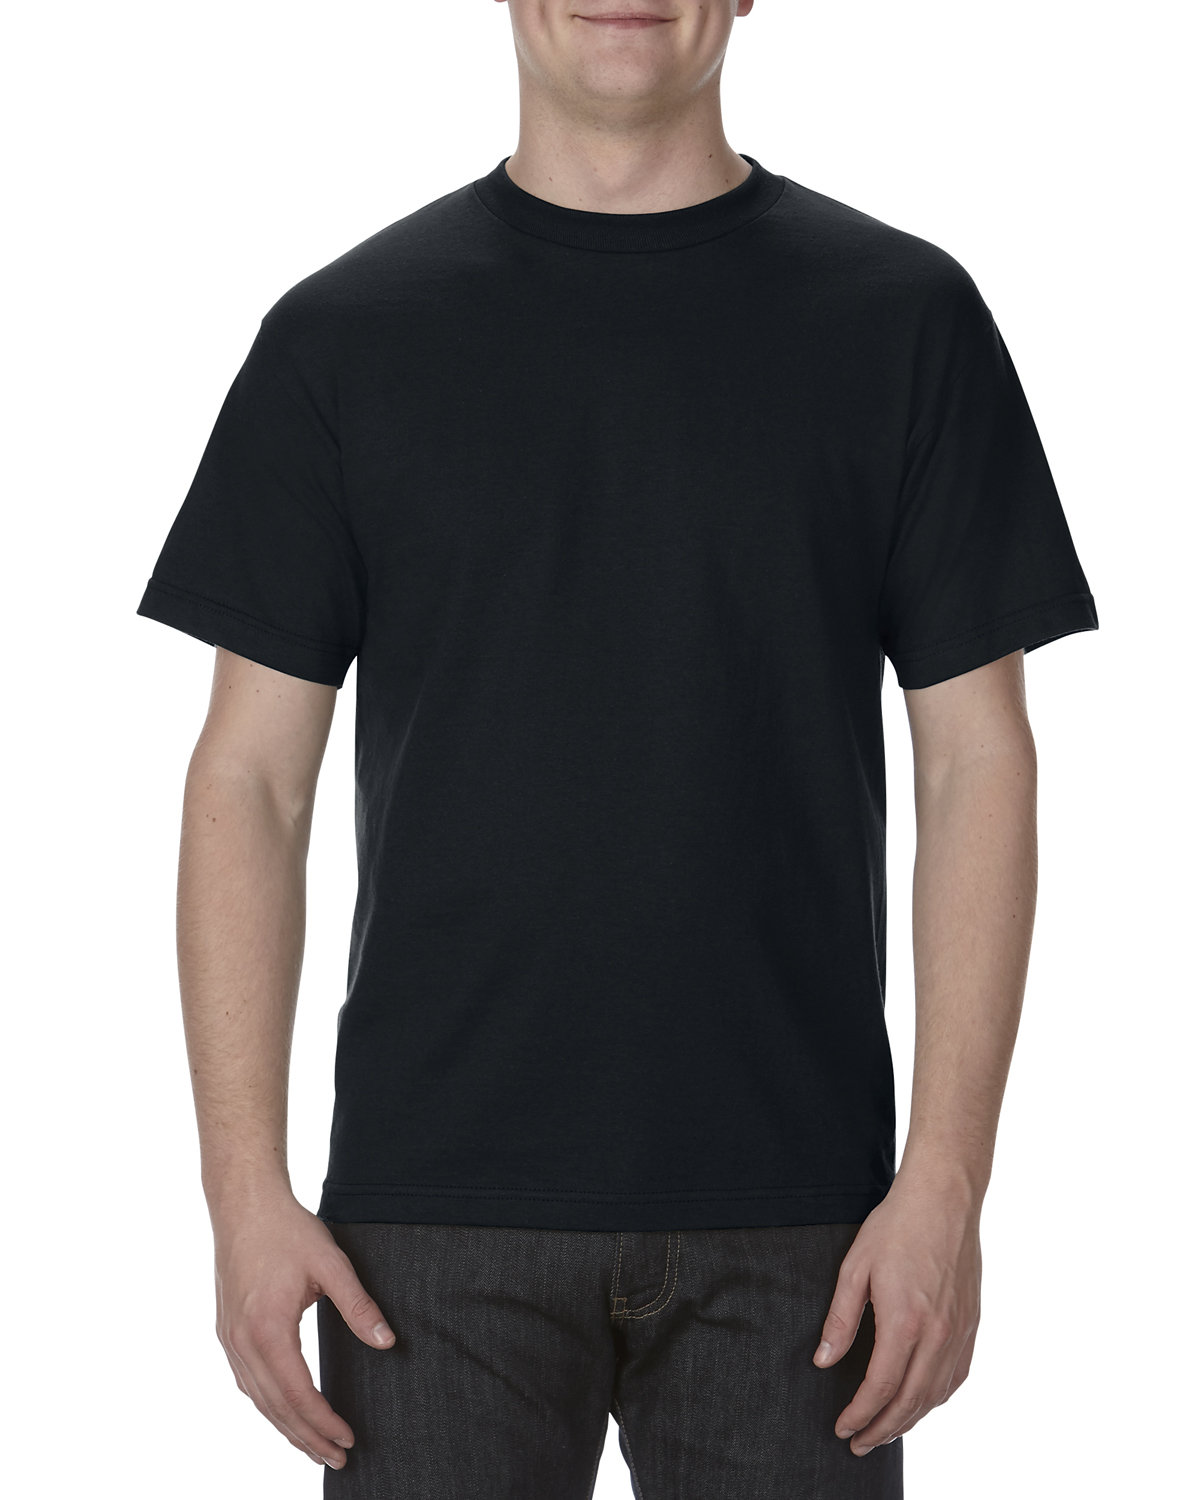 American Apparel Unisex Heavyweight Cotton T-Shirt black 